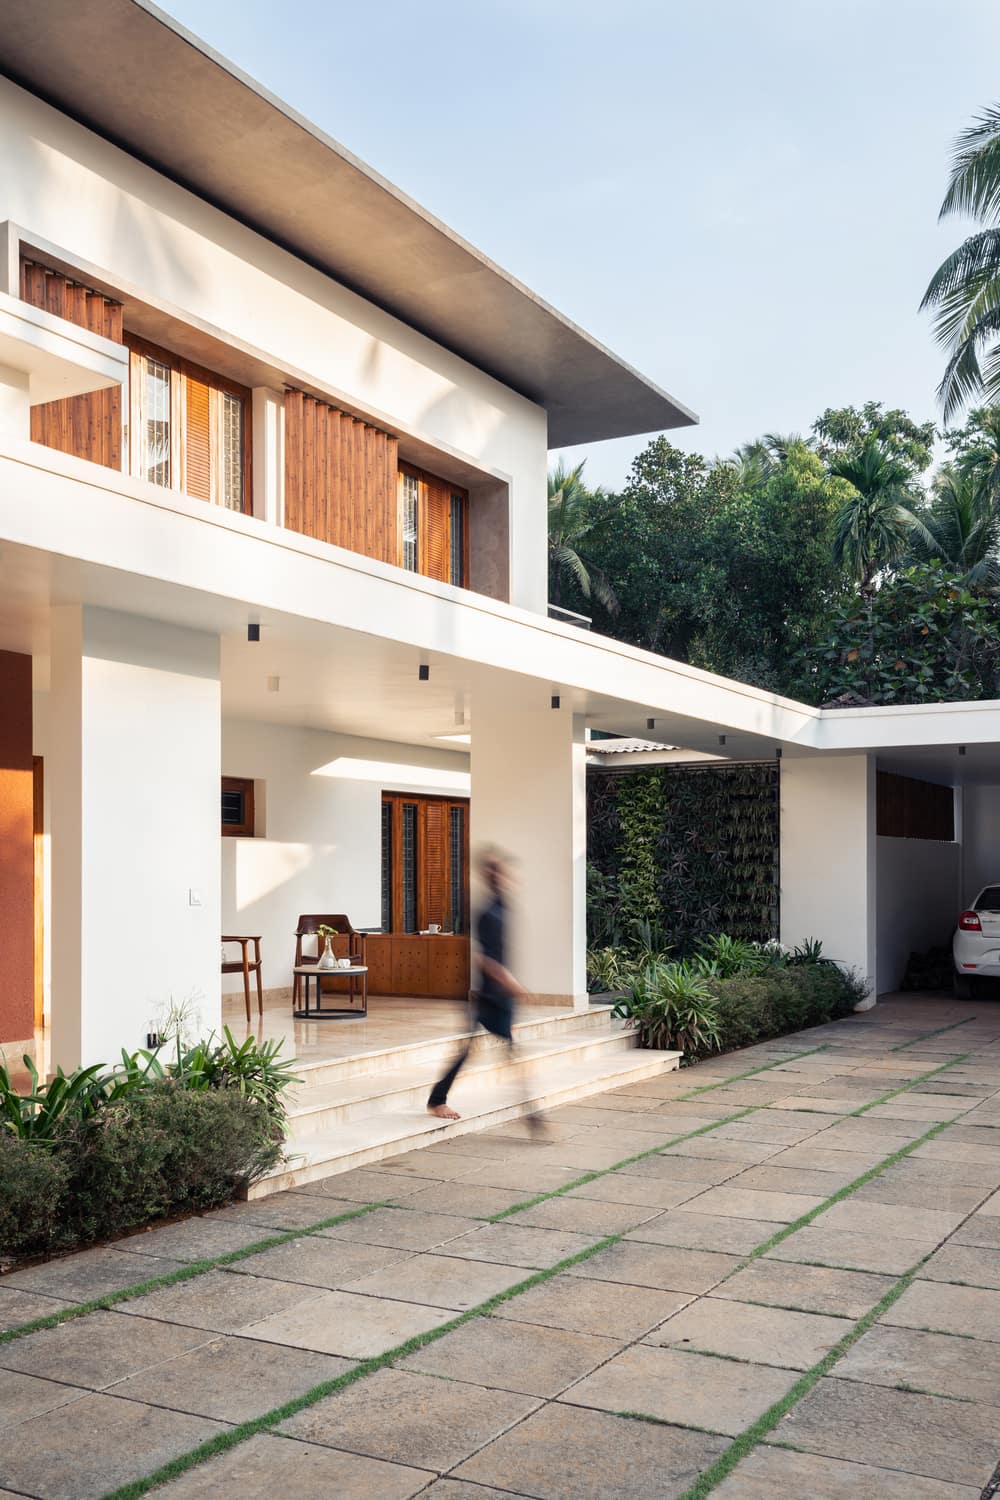 Vilathur Residence, India by Cognition Design Studio